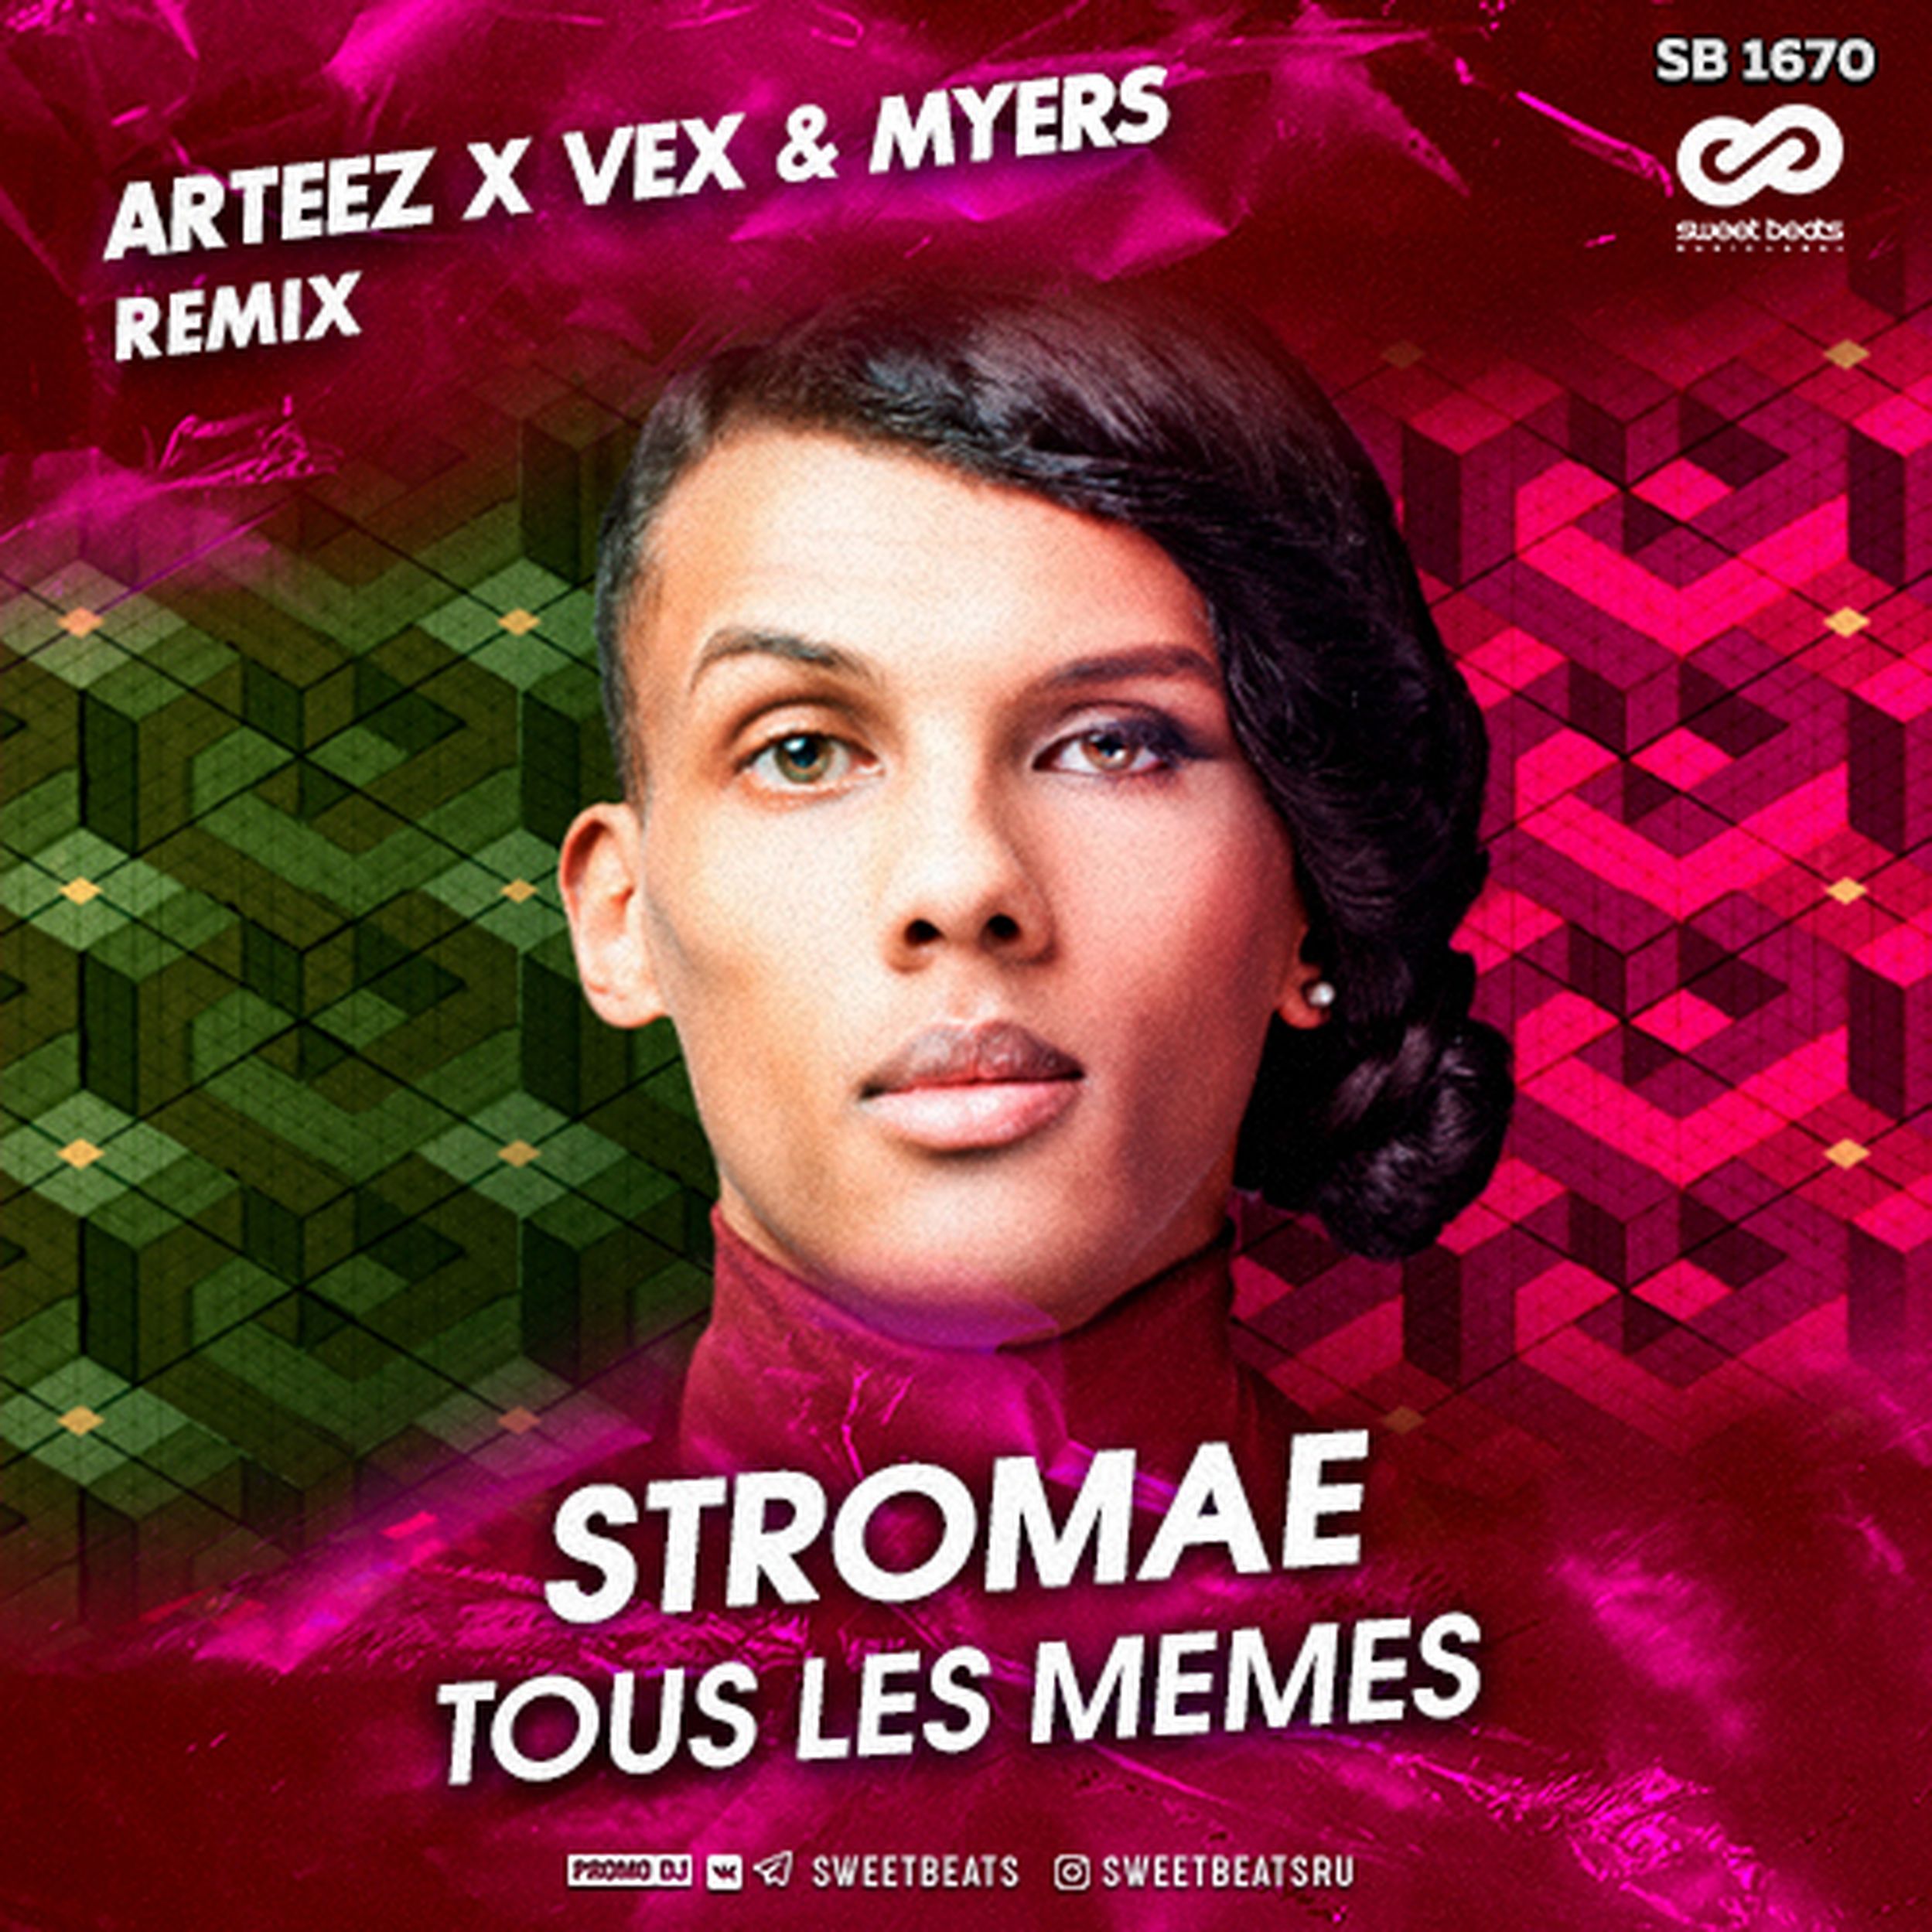 Stromae tous memes перевод. Стромае tous les memes. Стромае Рандеву. DJ ARTEEZ. Tous les mêmes от Stromae.